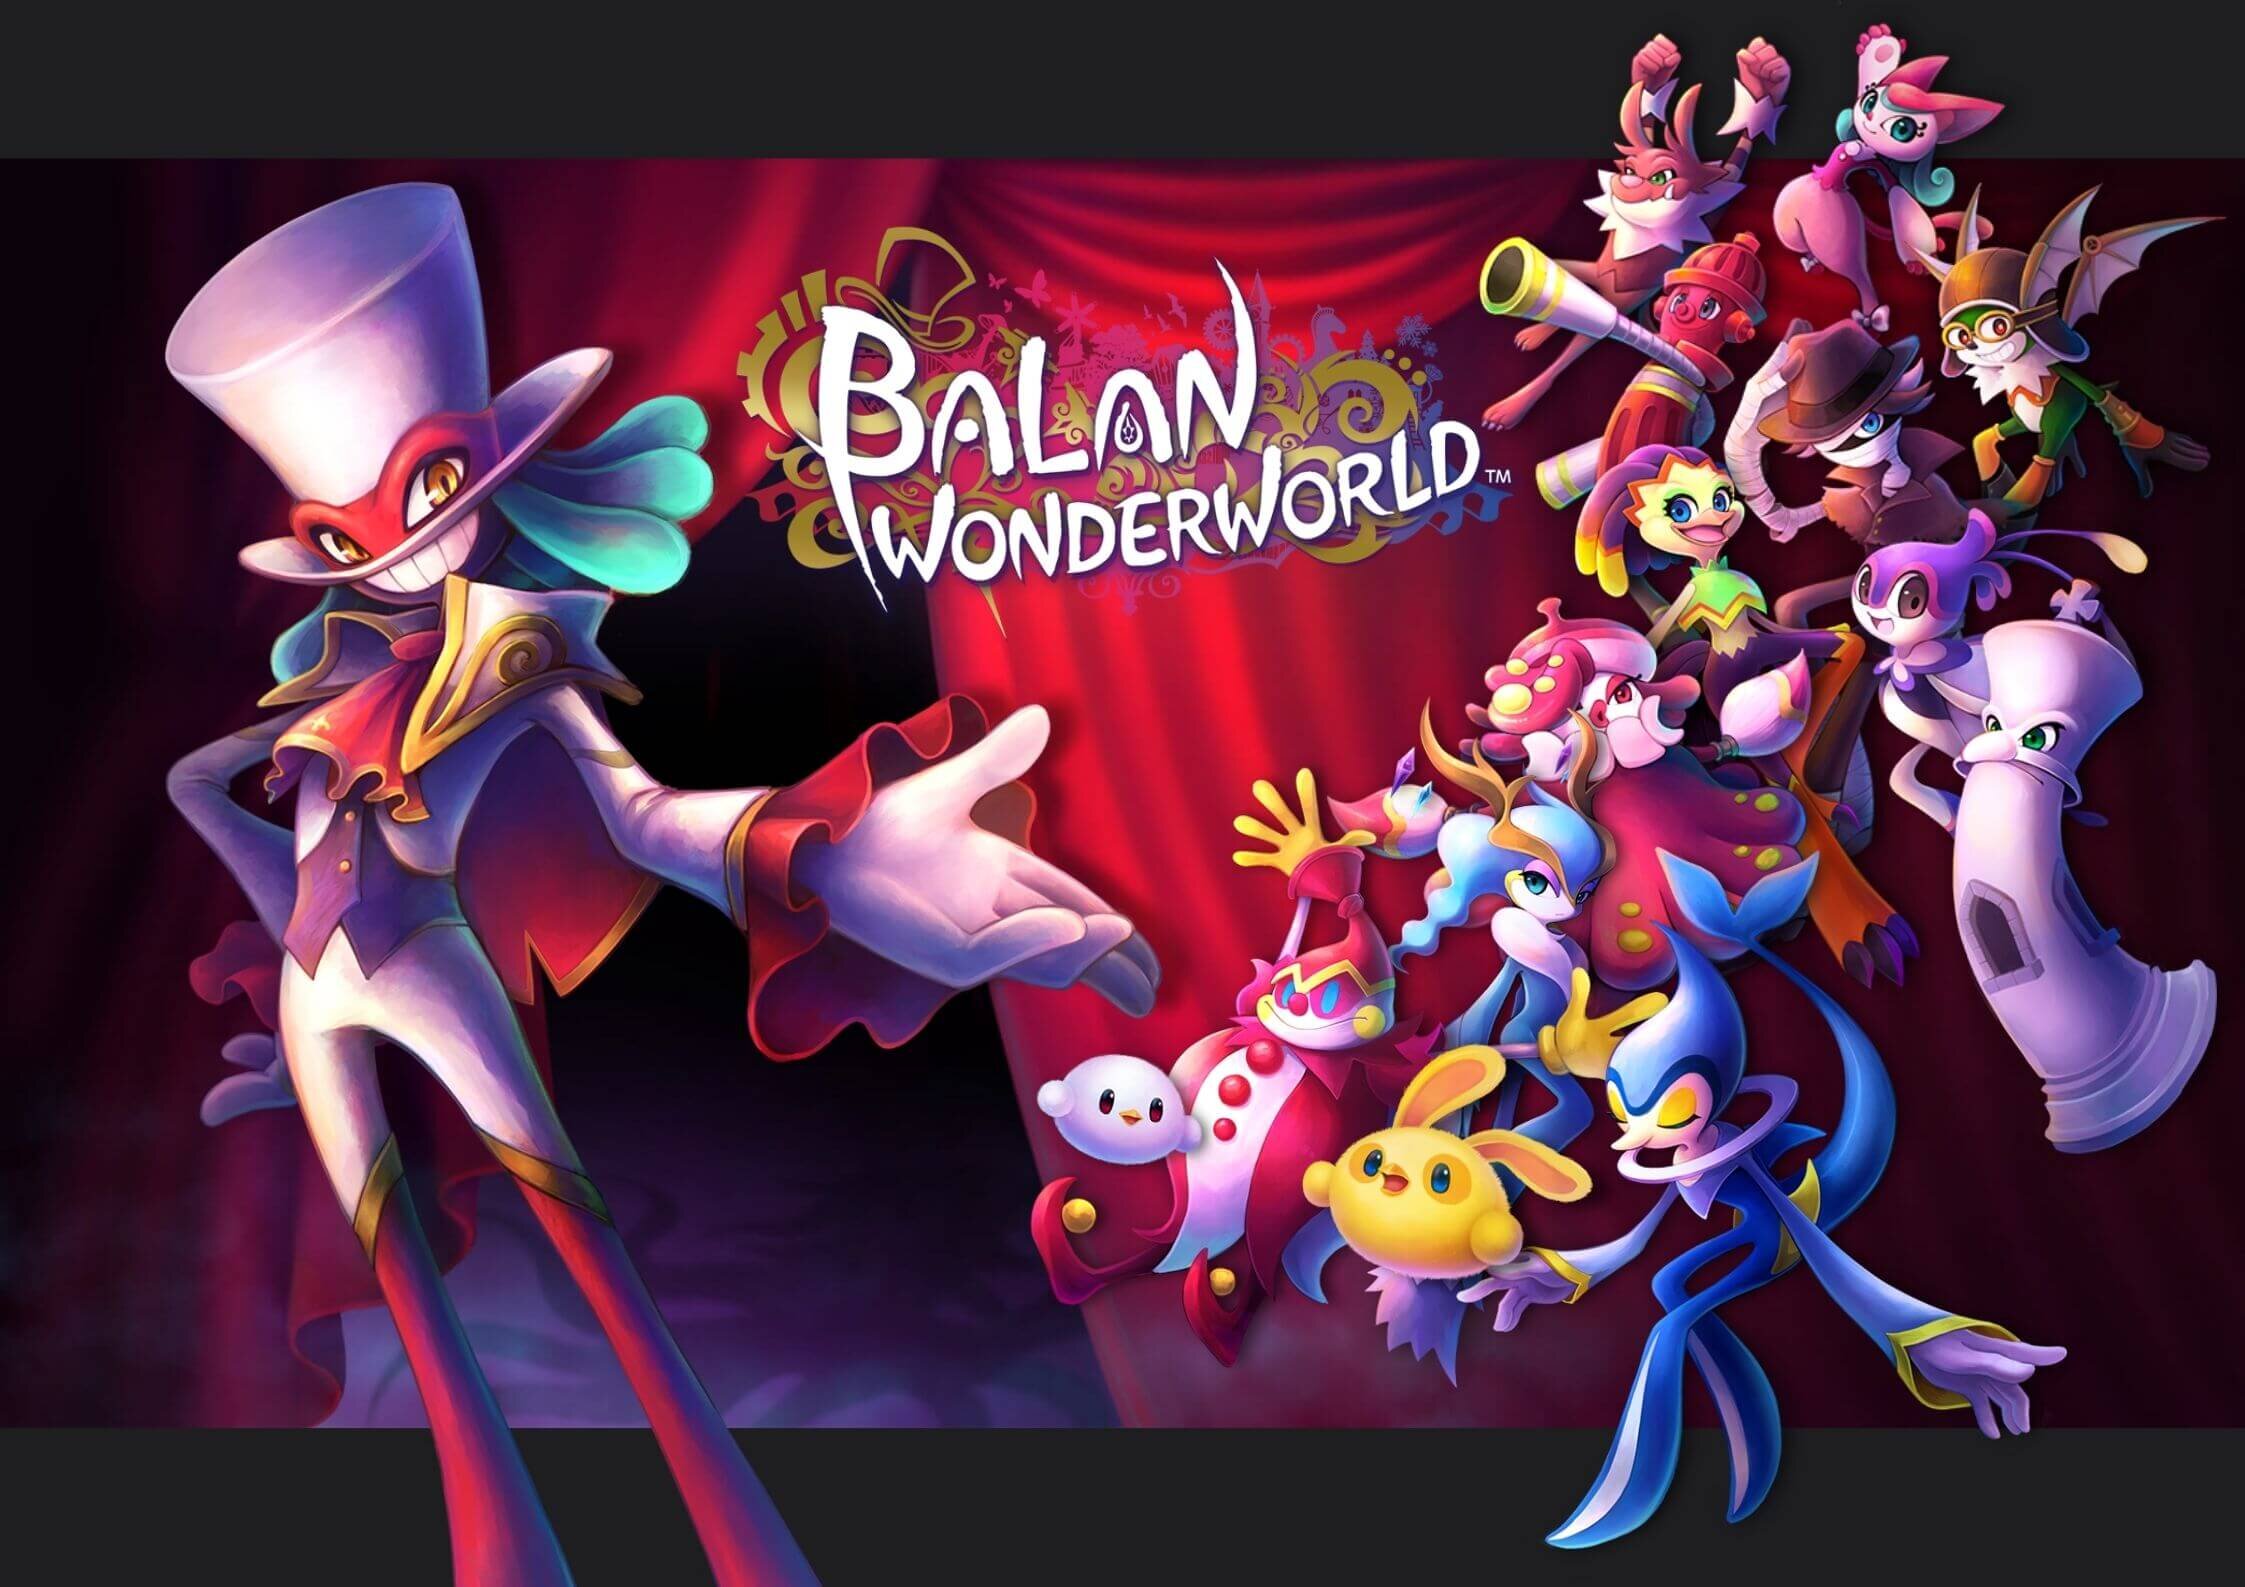 Balan Wonderworld: A Wonderland That You Never Knew!